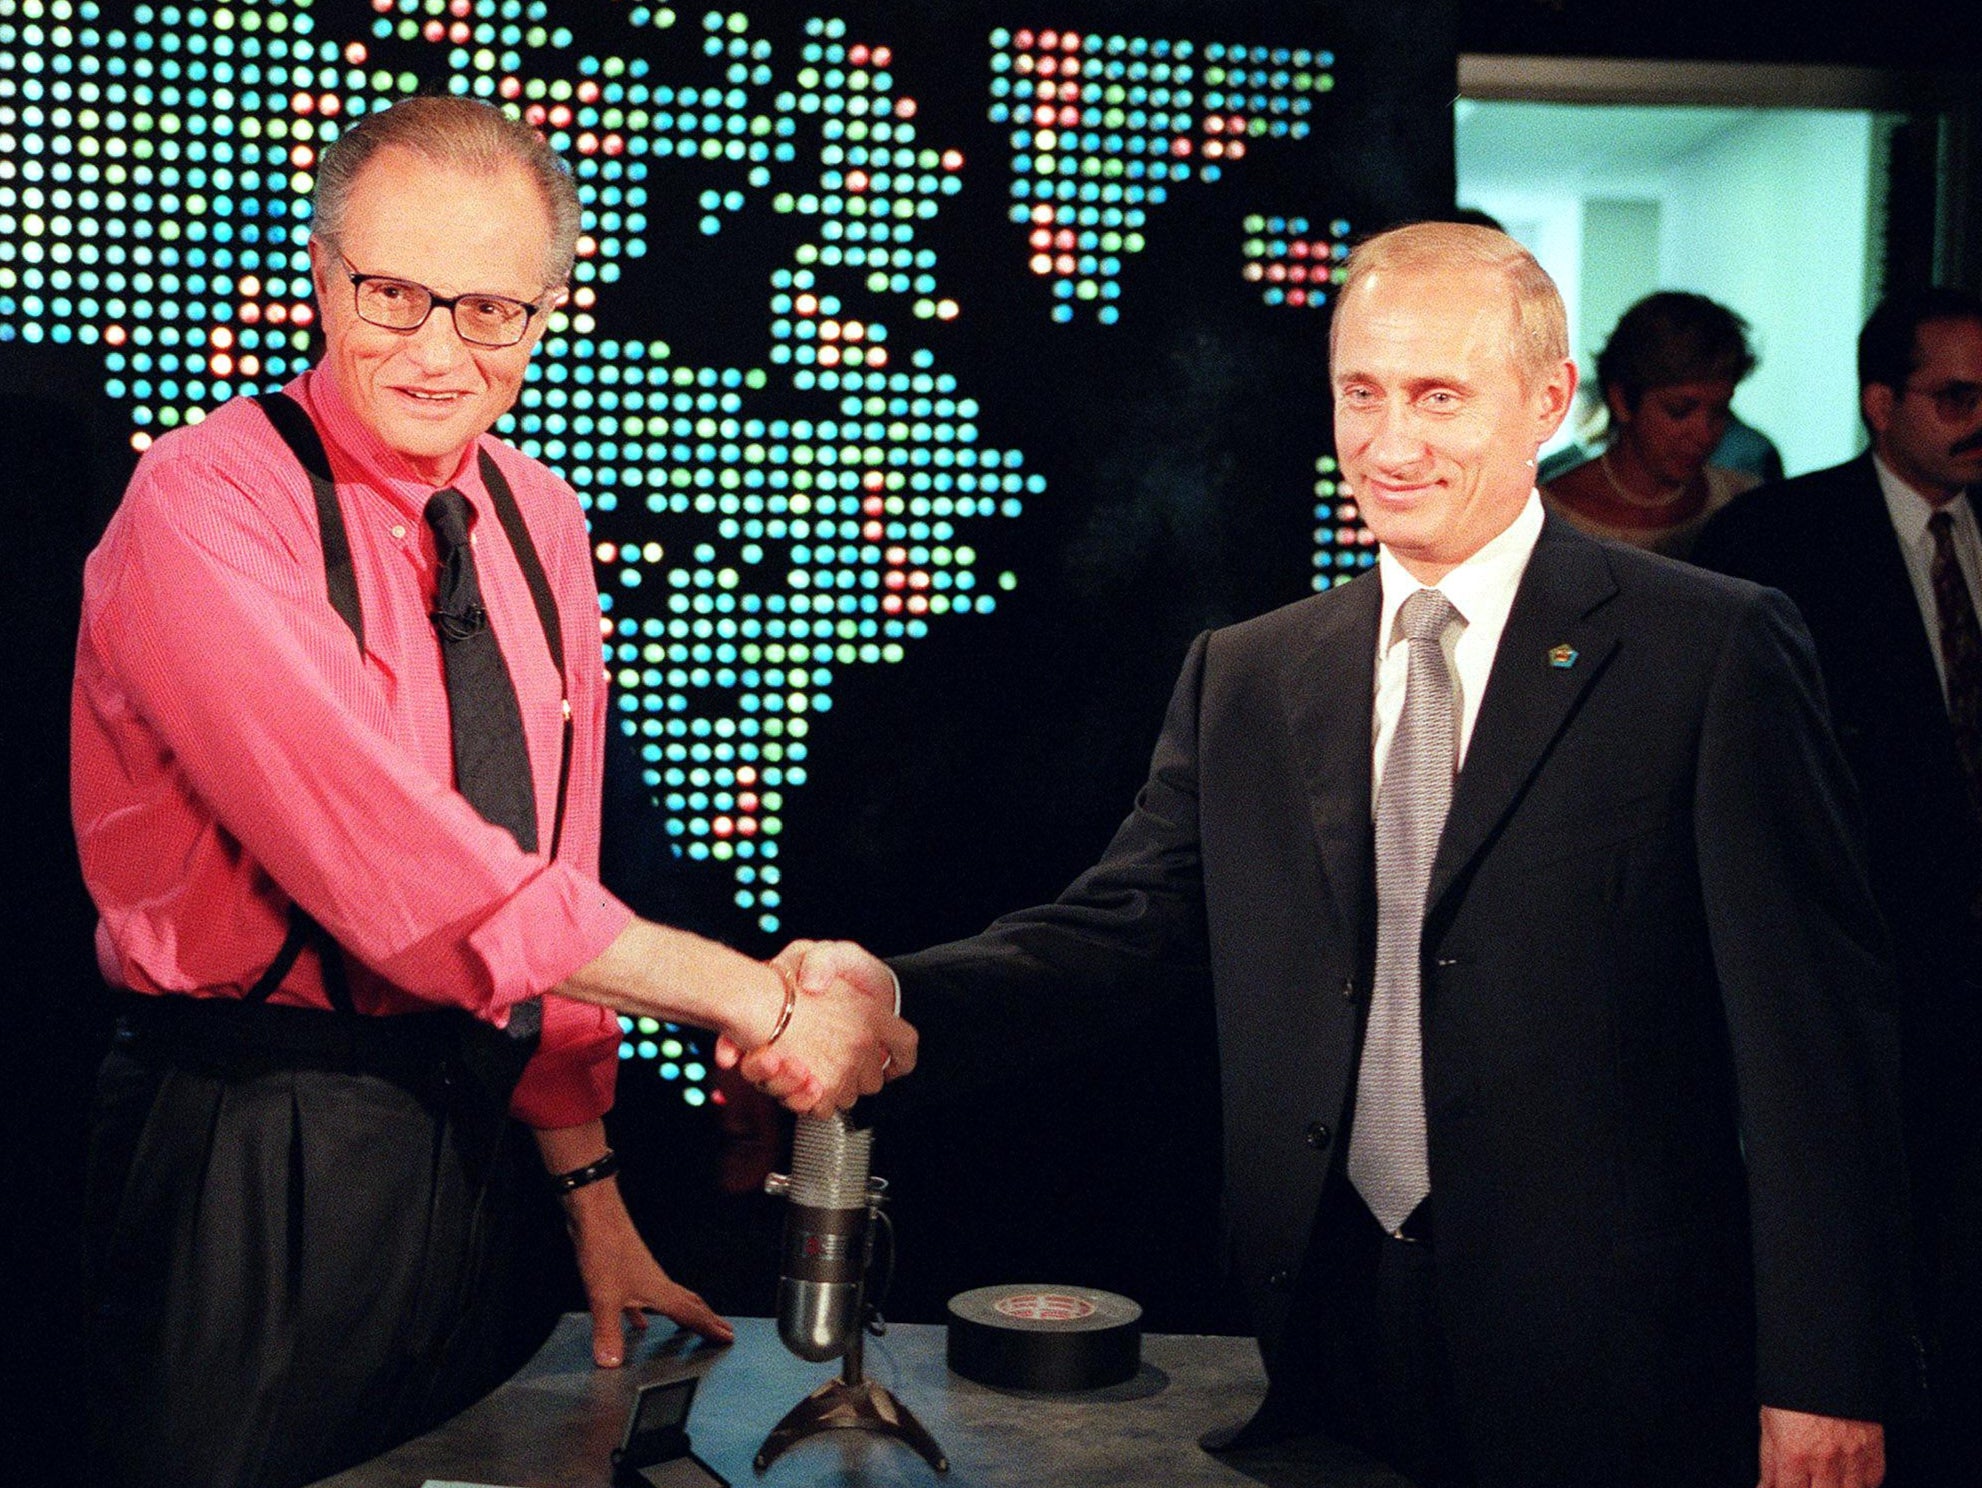 King interviewing Russian president Vladimir Putin in 2000